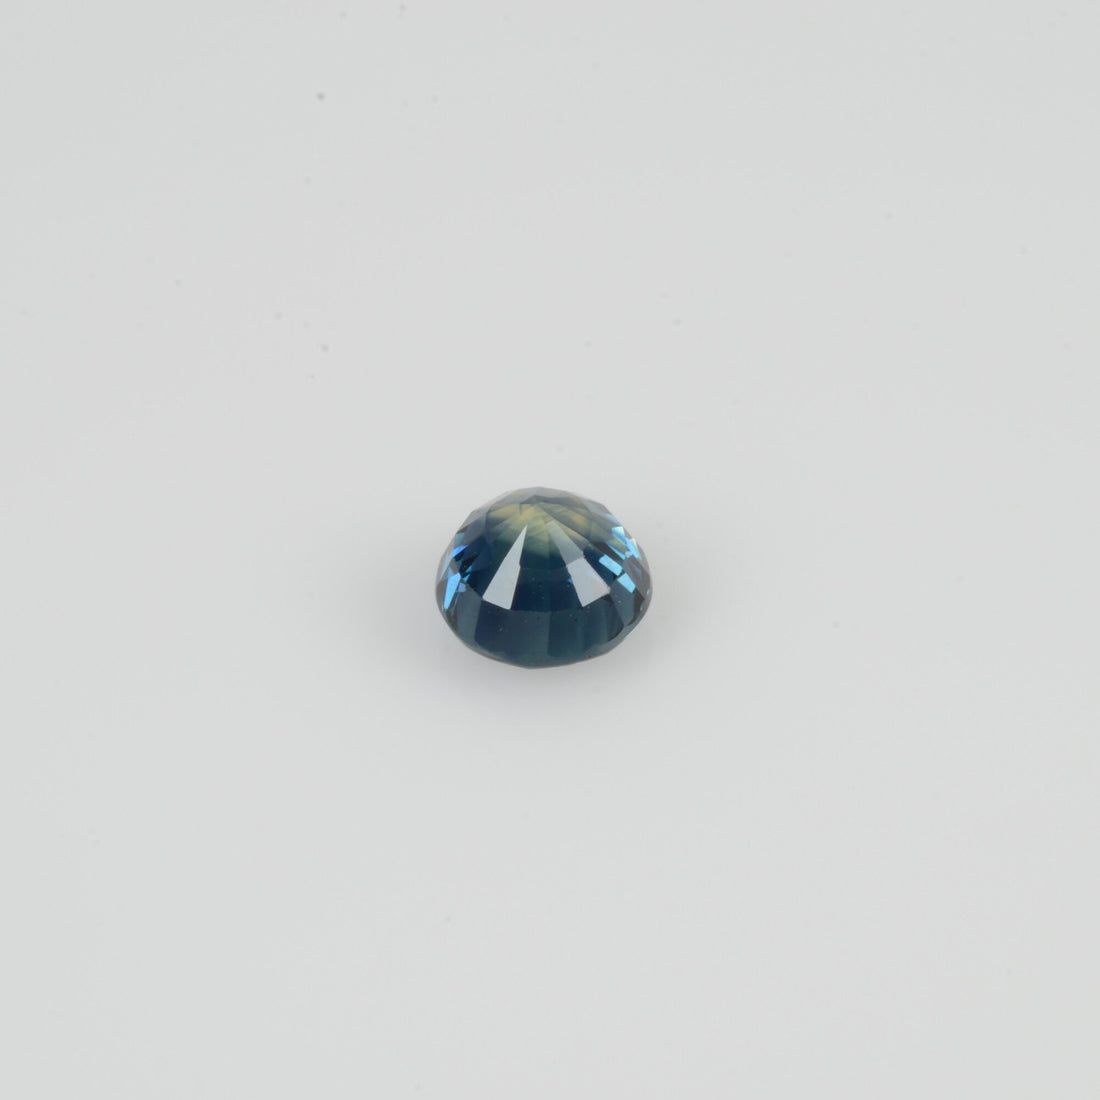 5.4 mm Natural Blue Sapphire Loose Gemstone Round Cut